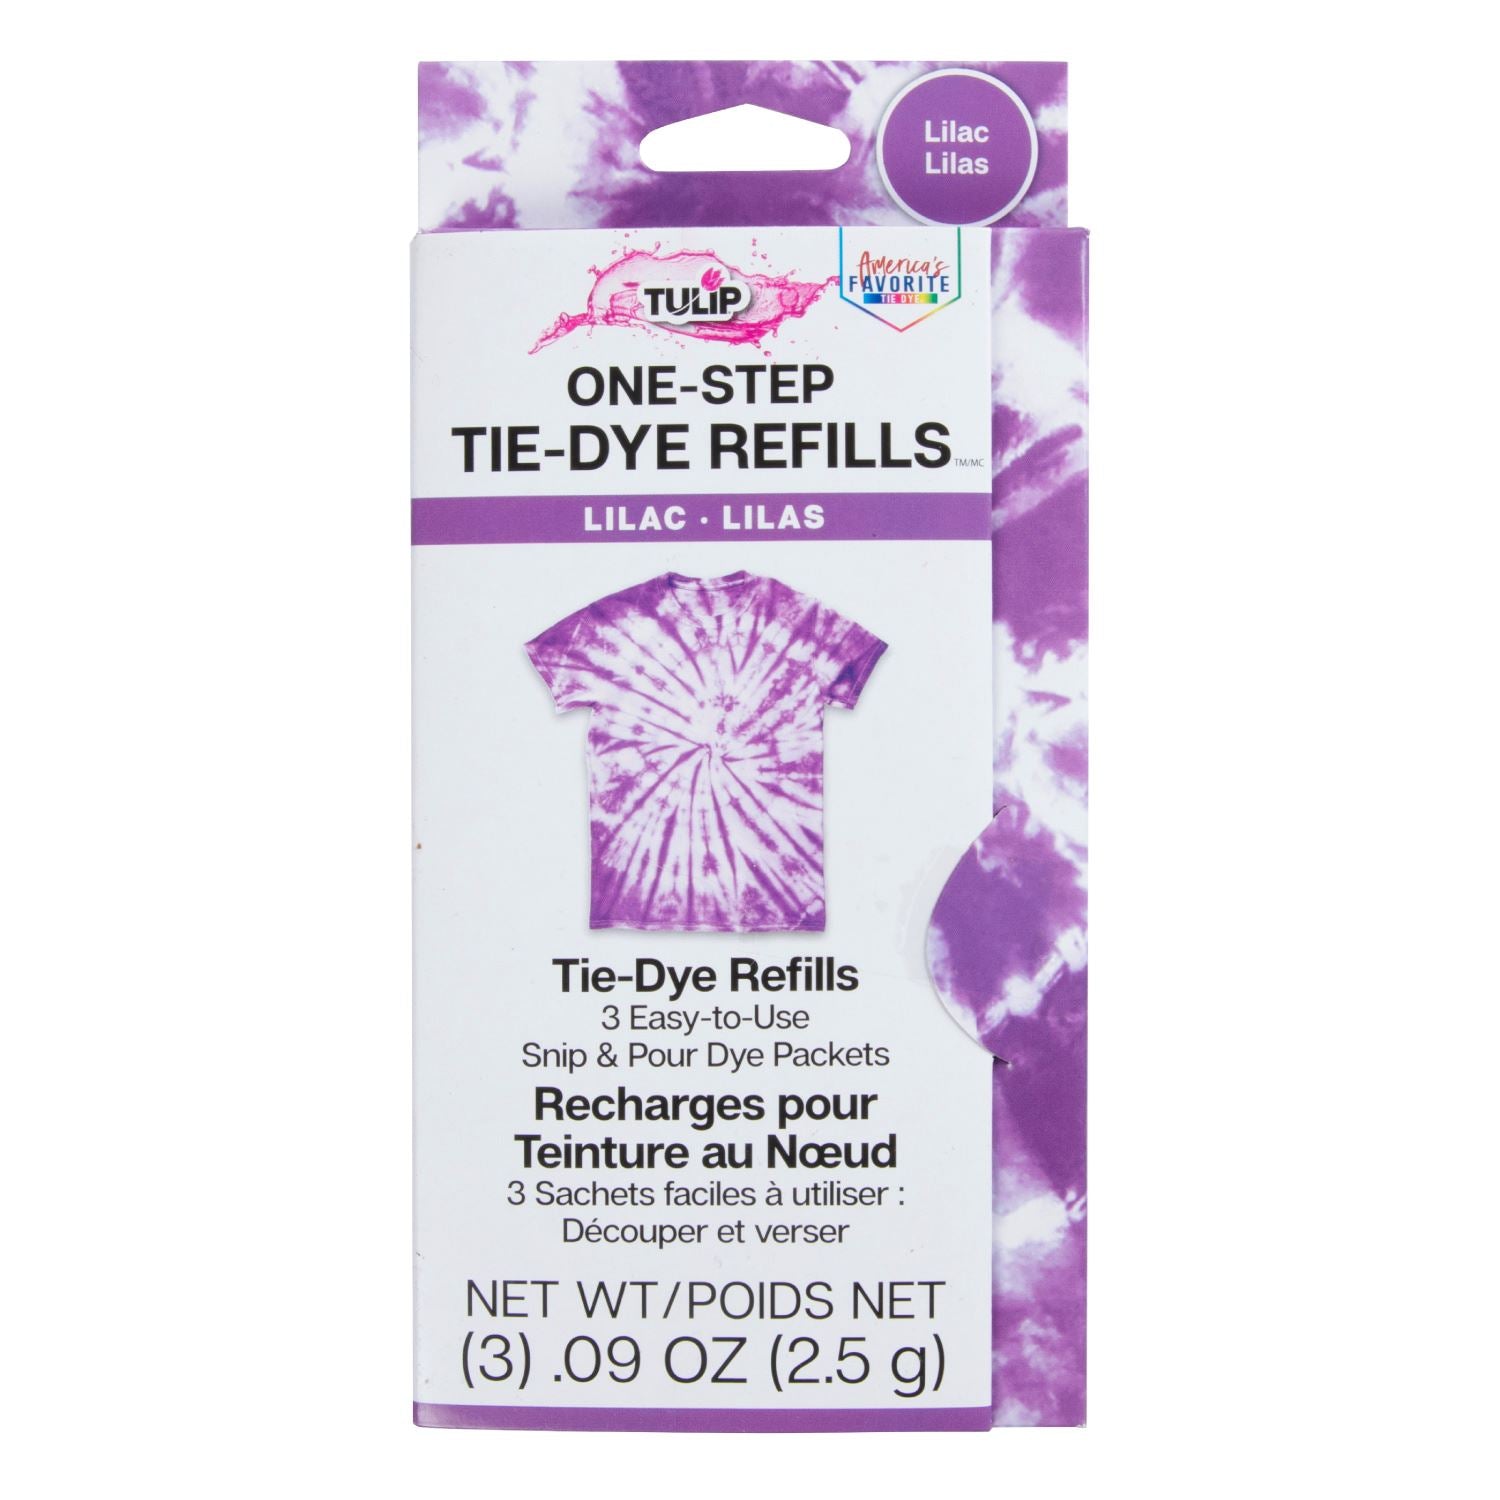 Tulip One-Step Tie-Dye Refills Lilac - 1